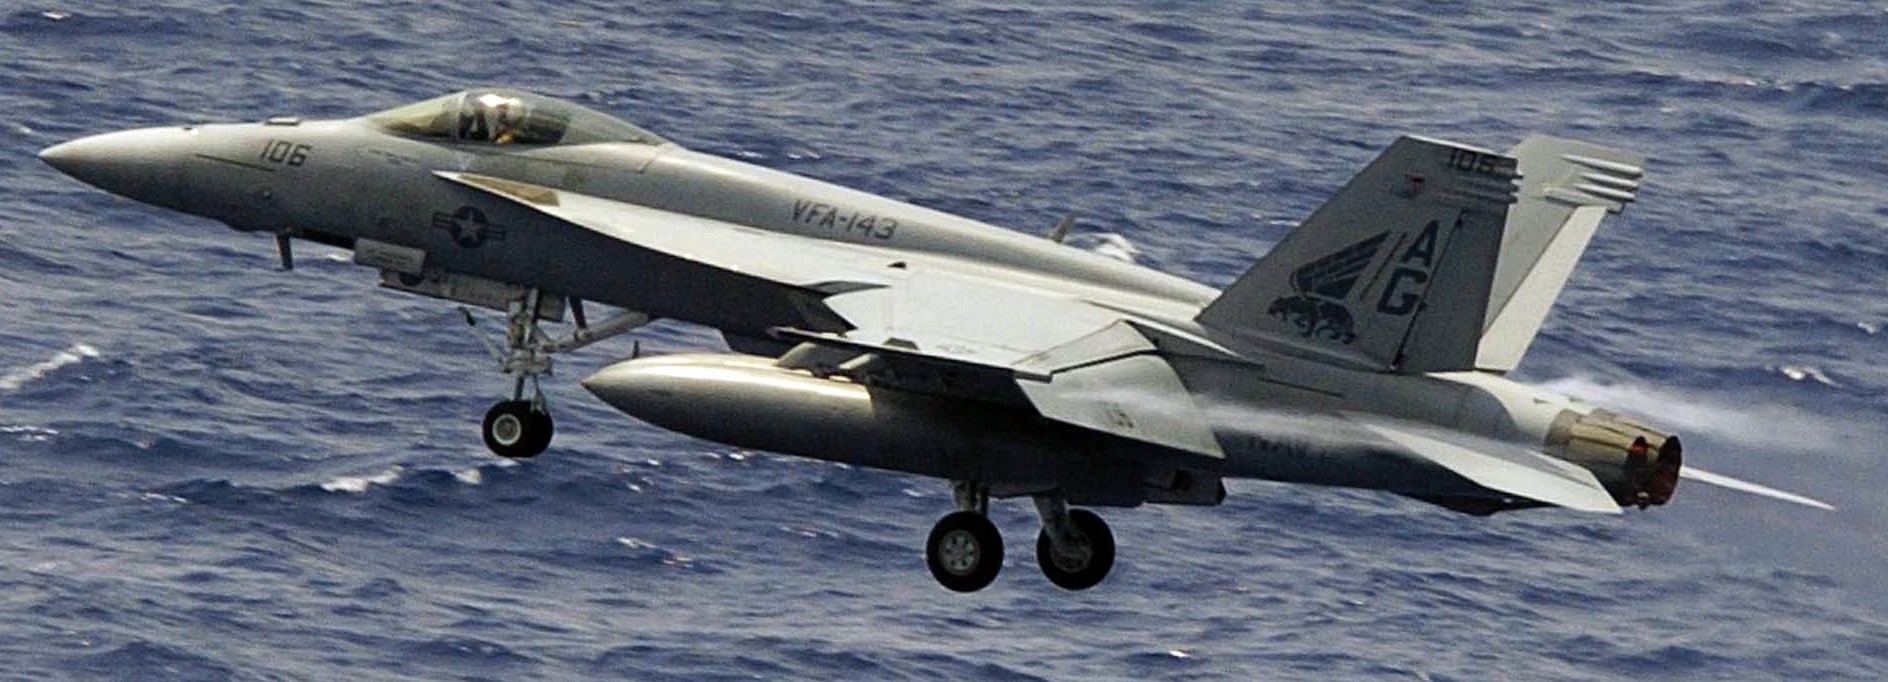 vfa-143 pukin dogs strike fighter squadron f/a-18e super hornet cvw-7 uss dwight d. eisenhower cvn-69 2006 75